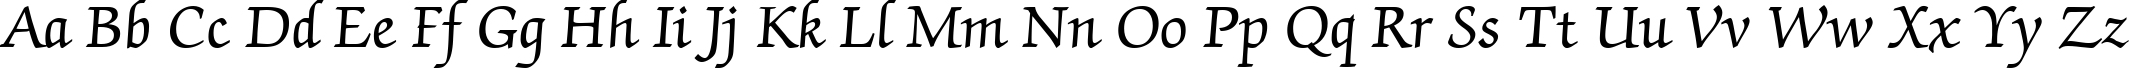 Пример написания английского алфавита шрифтом Zapf Chancery Medium BT